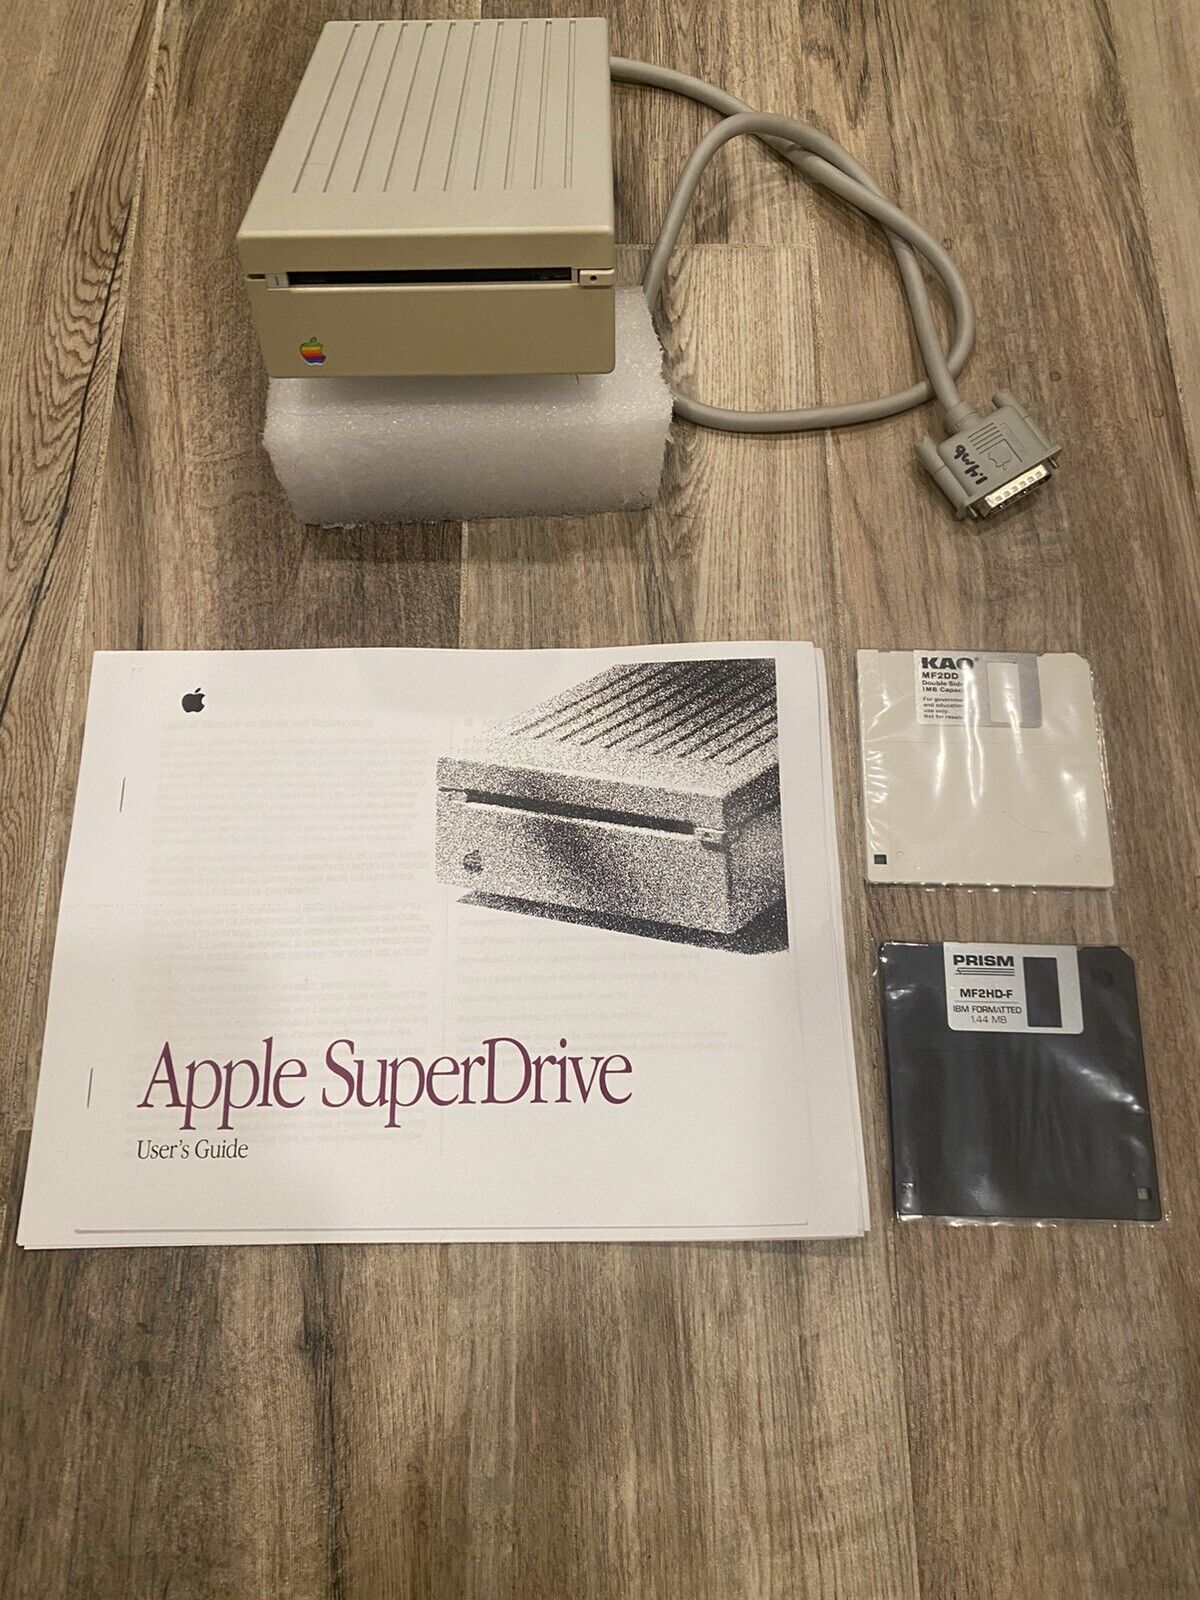 Apple SuperDrive External Floppy 1.4MB FDHD Disk Drive G7287 Vintage Mac IIgs